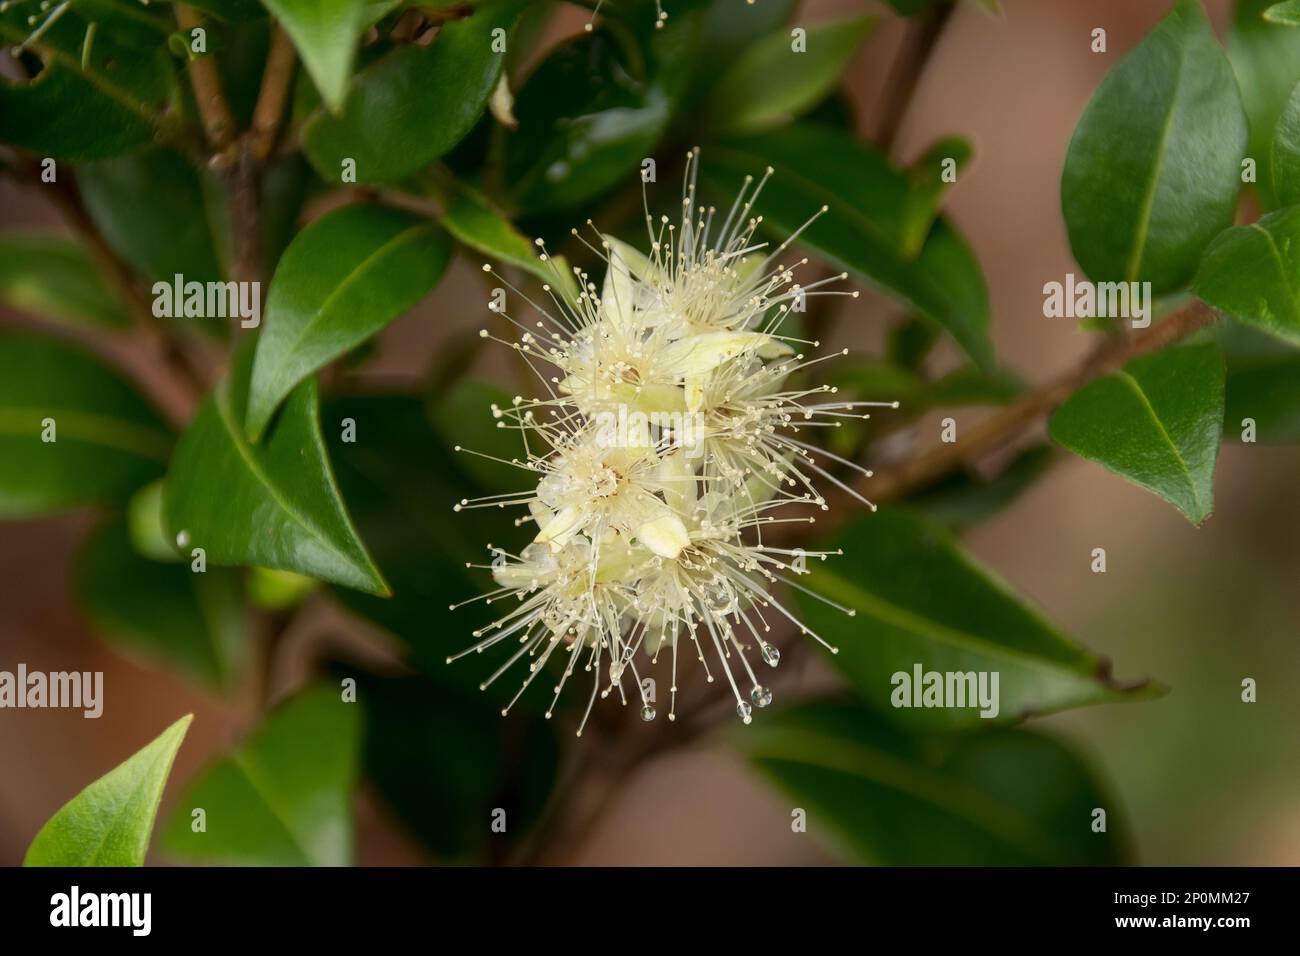 Delicate cream flowers of Australian Backhousia citriodora - Lemon myrtle. Bush medicine, food flavouring, cosmetics. Queensland rainforest native. Stock Photo